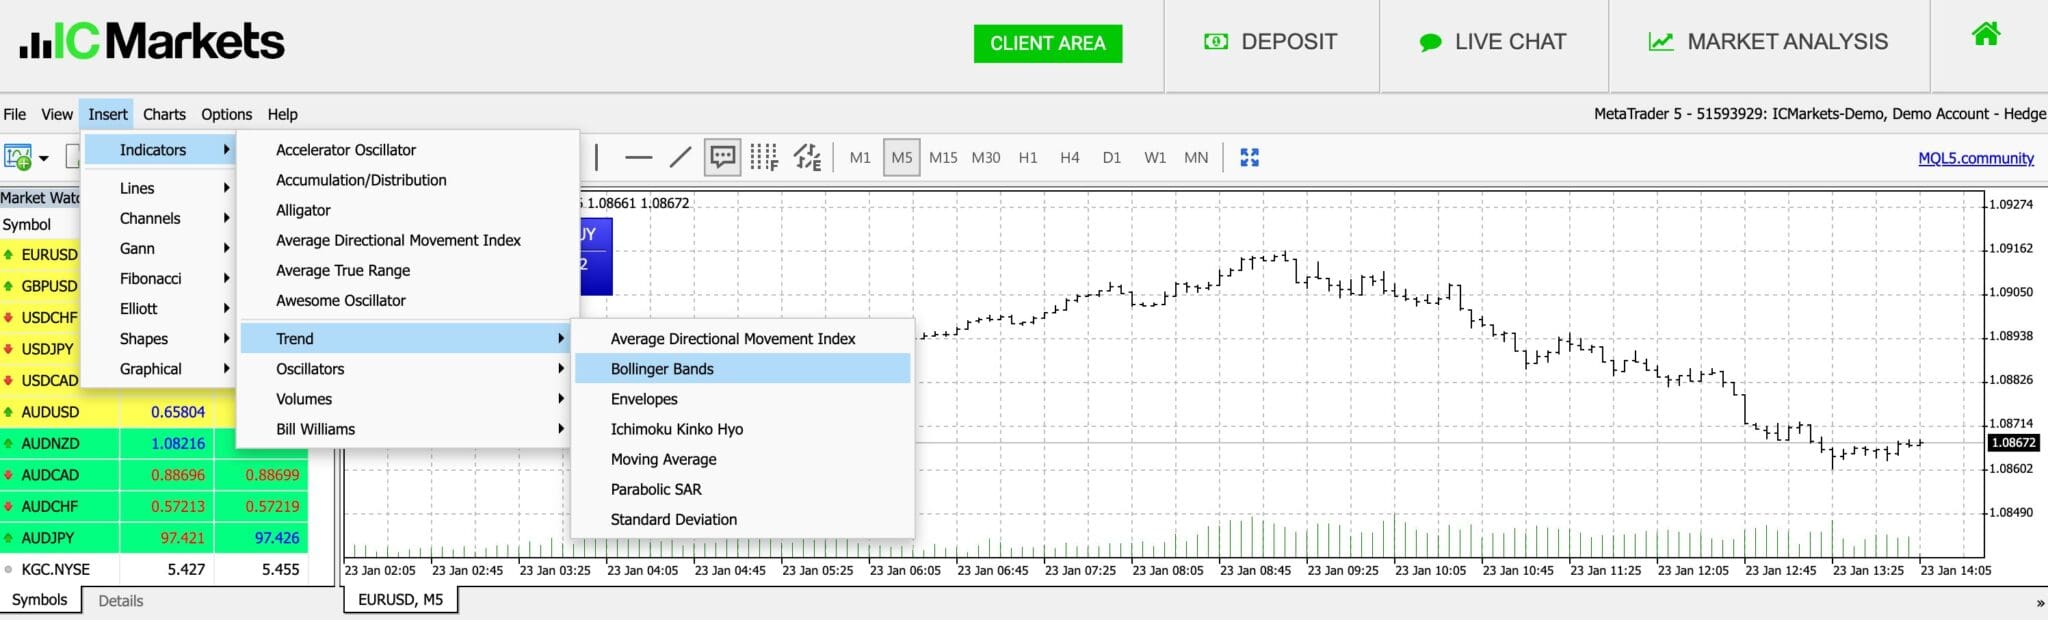 IC Markets MetaTrader 5 day trading platform indicators